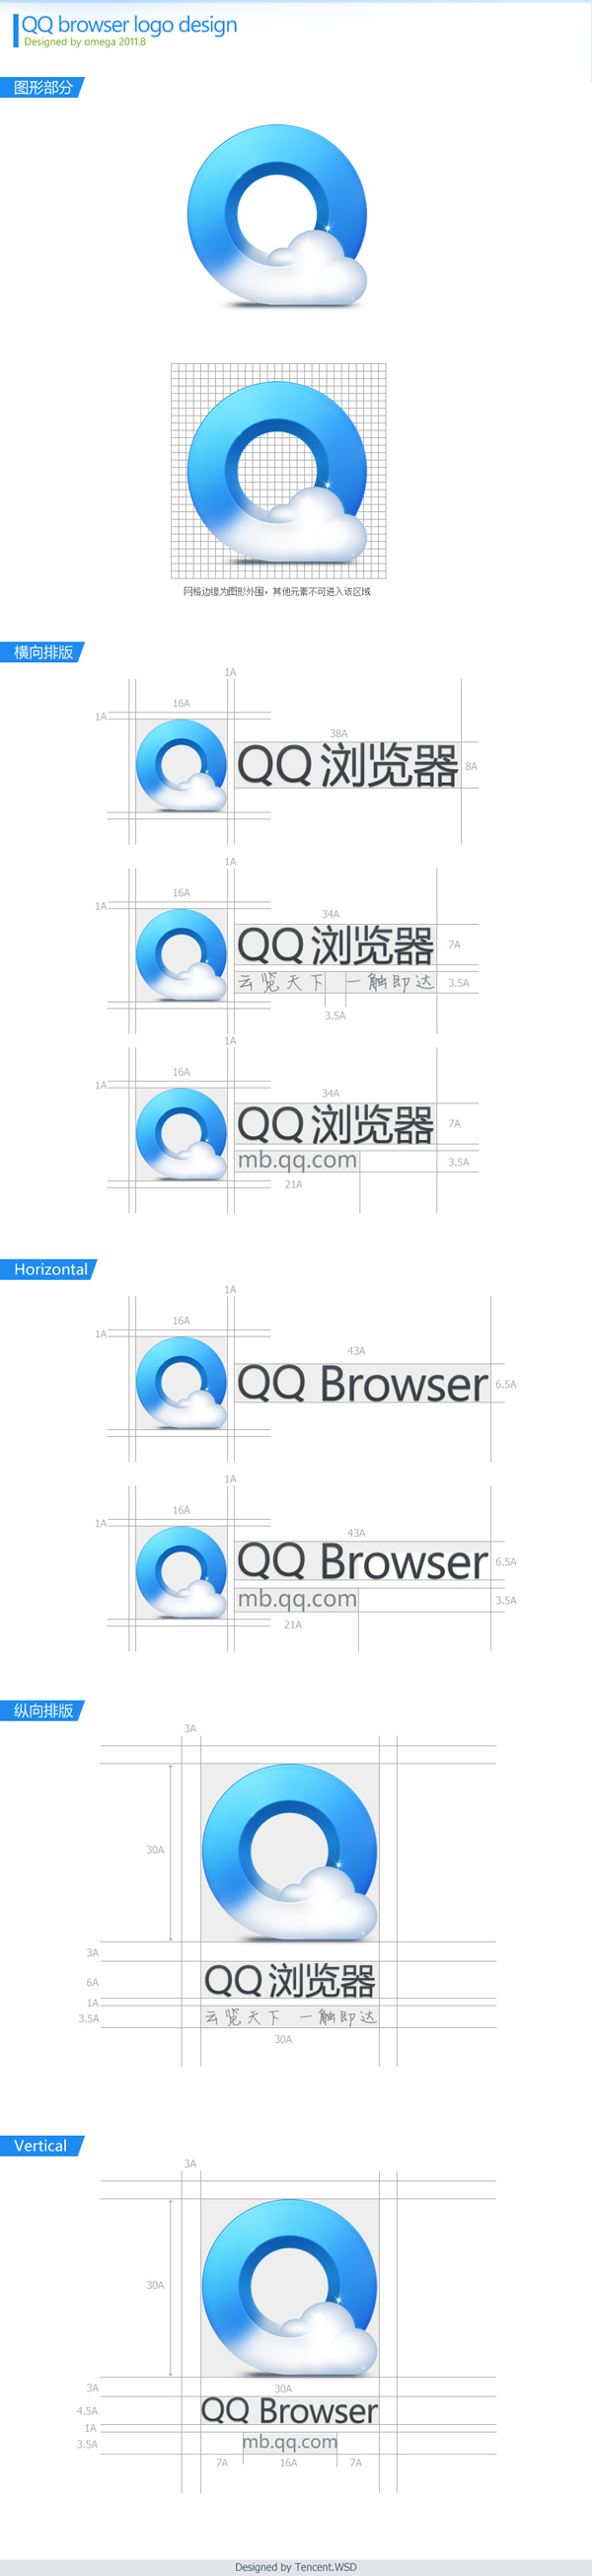 qqmb6 手机QQ浏览器Logo设计